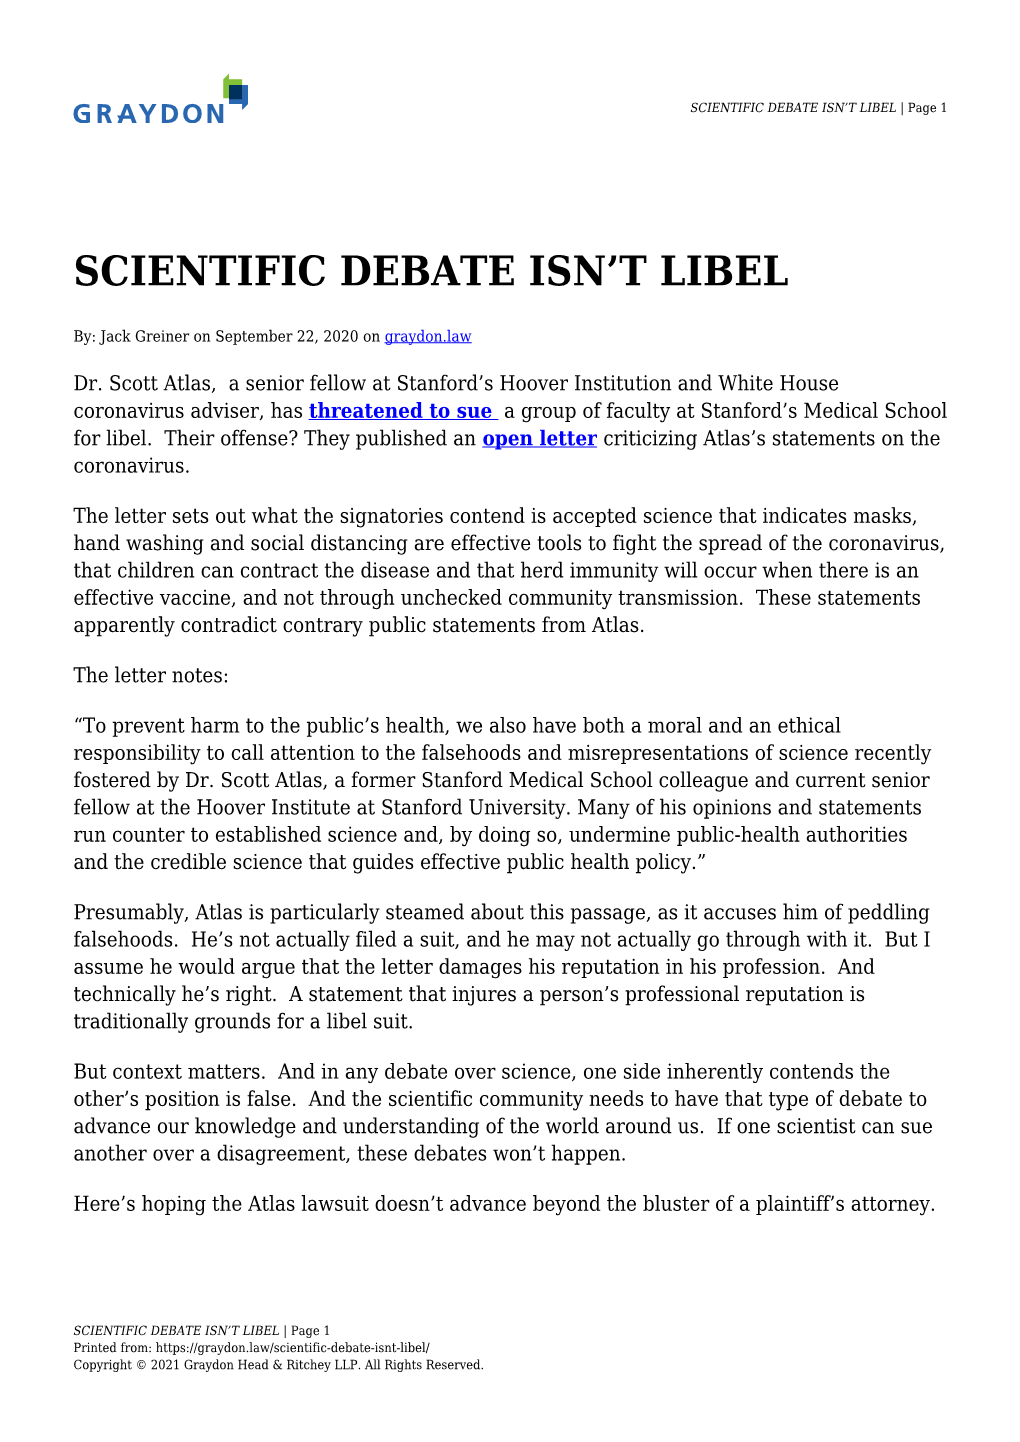 Scientific Debate Isn't Libel